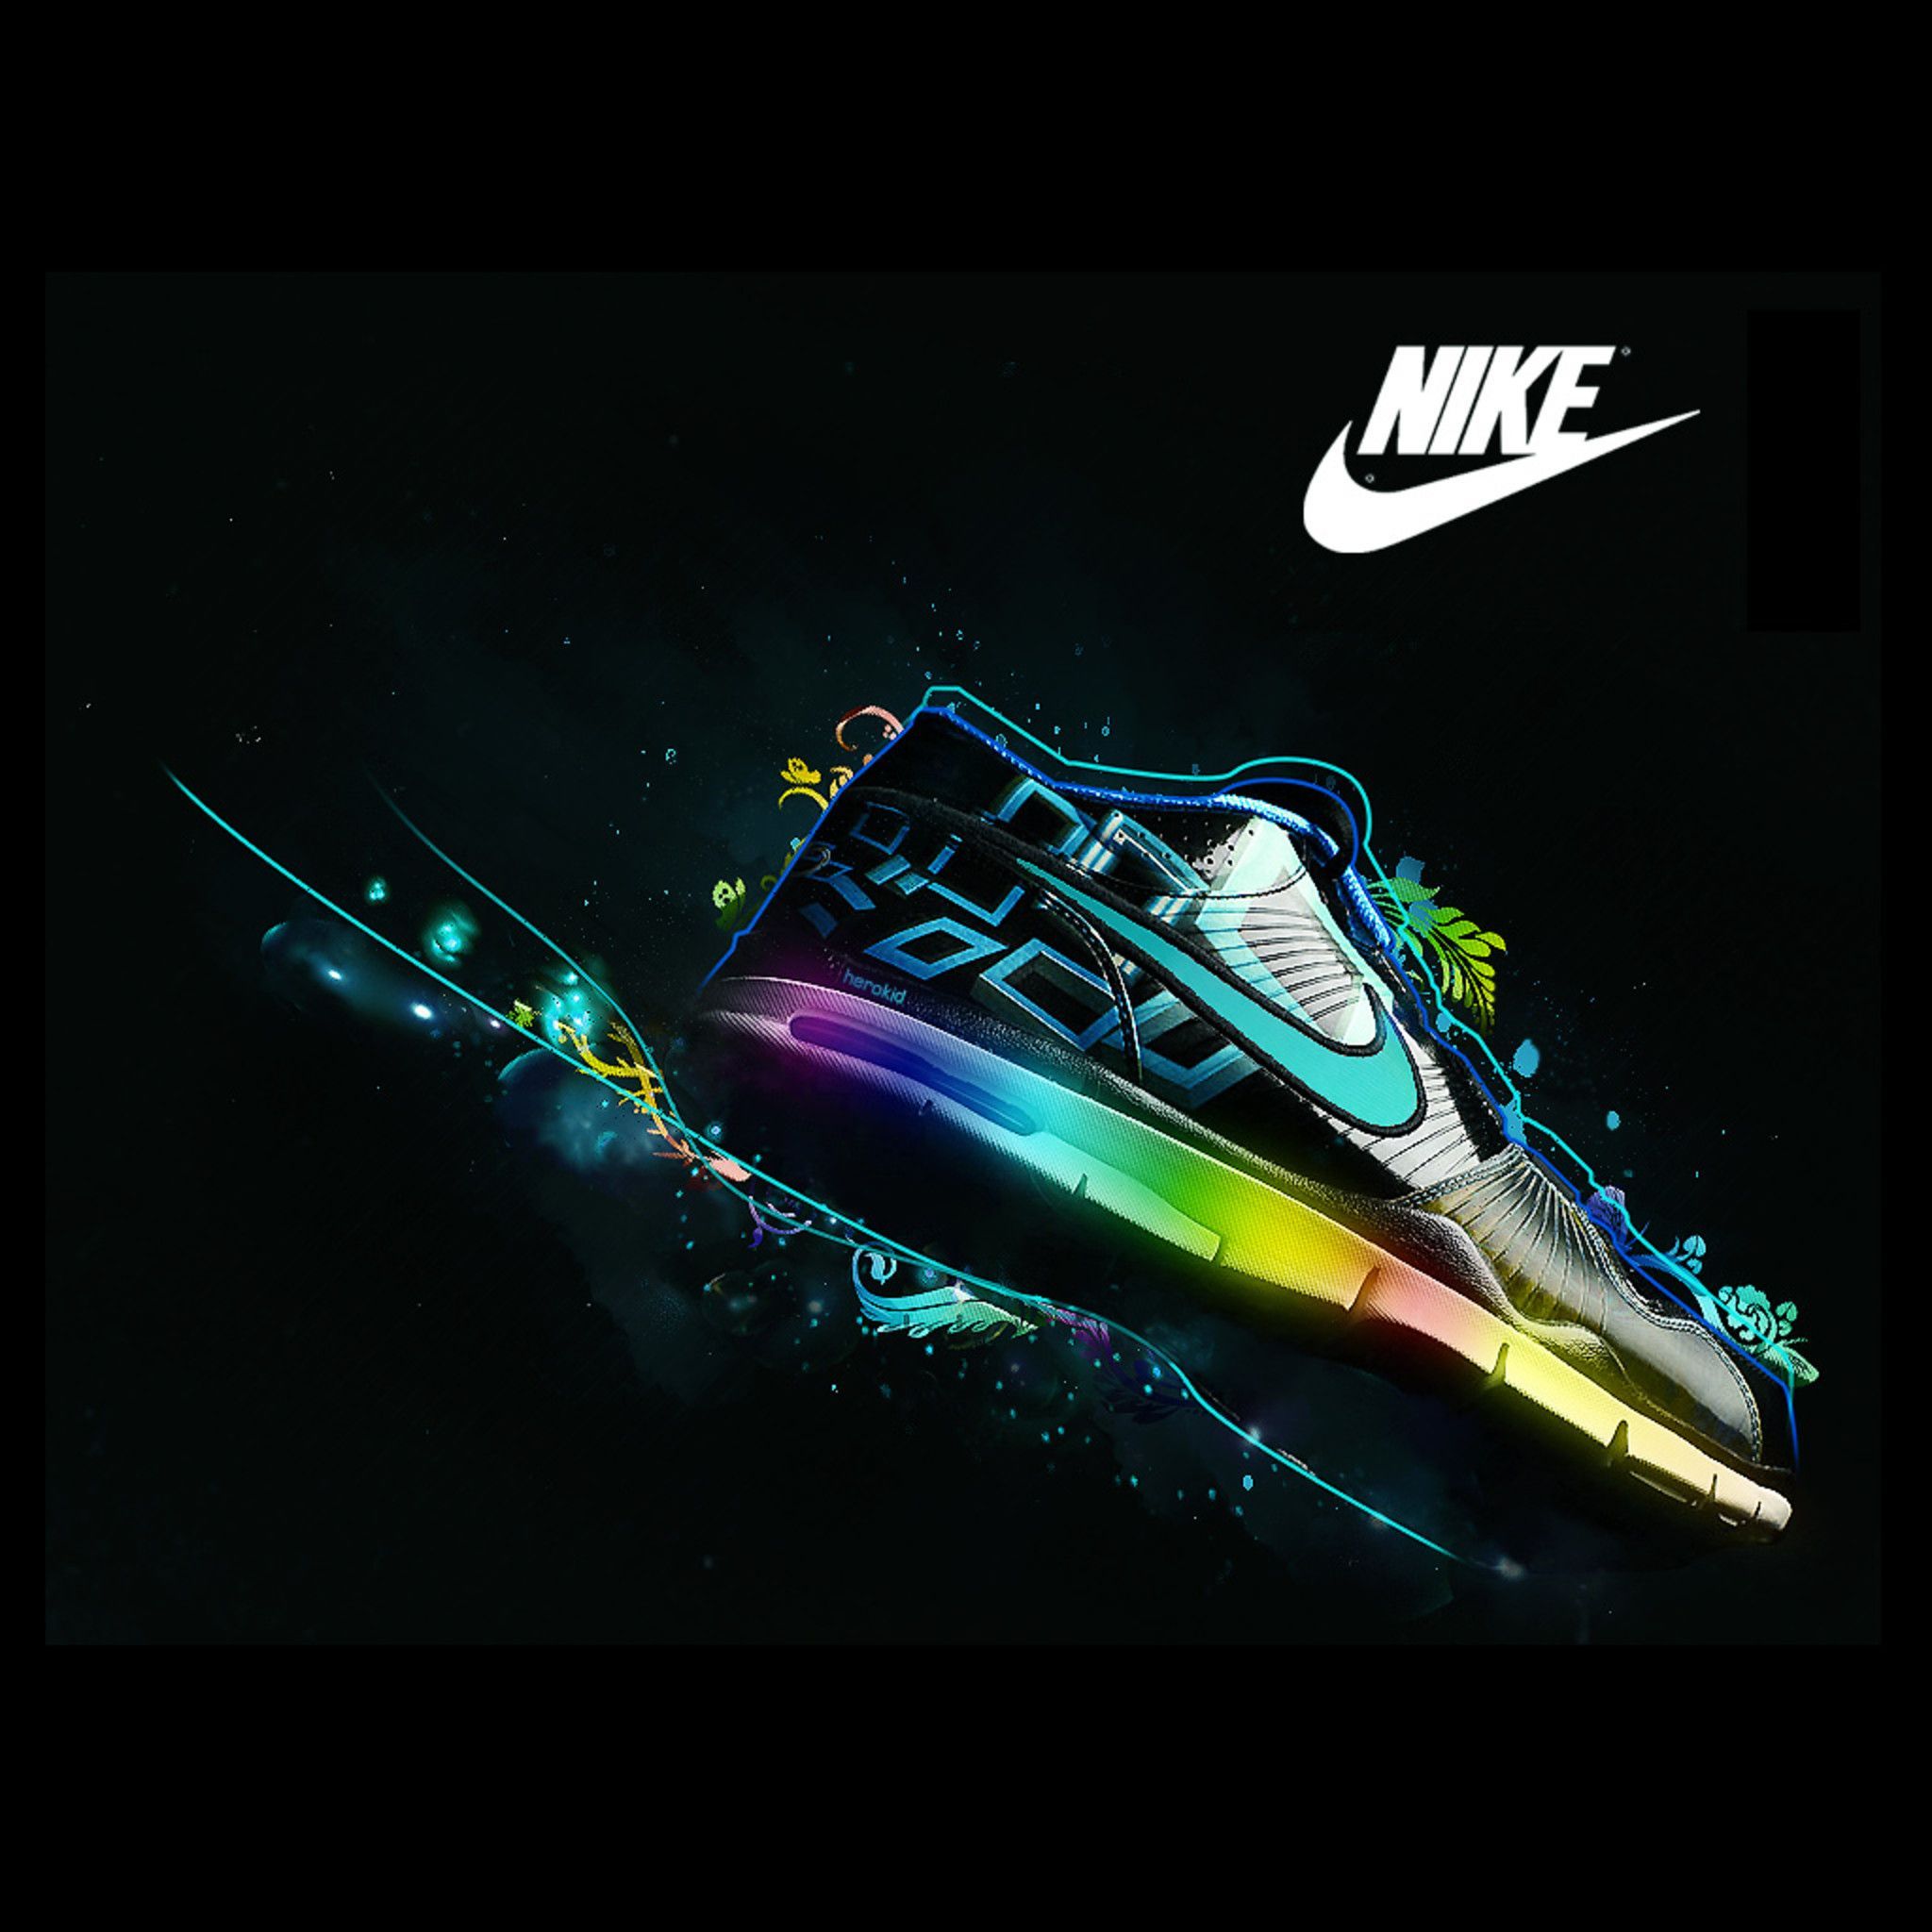 Nike Shoes Wallpapers Ipad タブレット壁紙ギャラリー